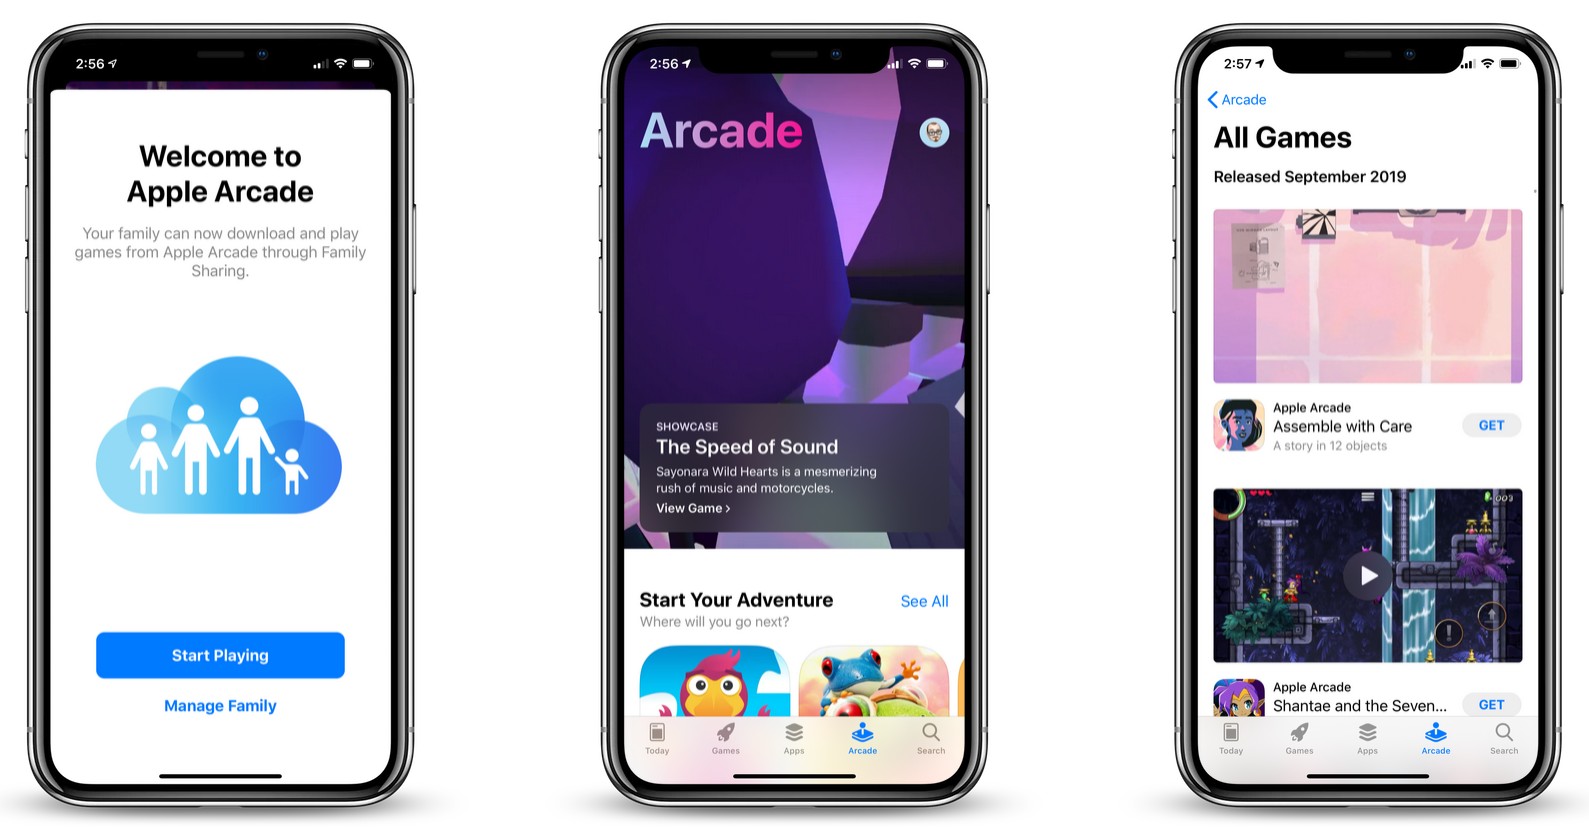 Apple Arcade Already Available For Some iOS Users